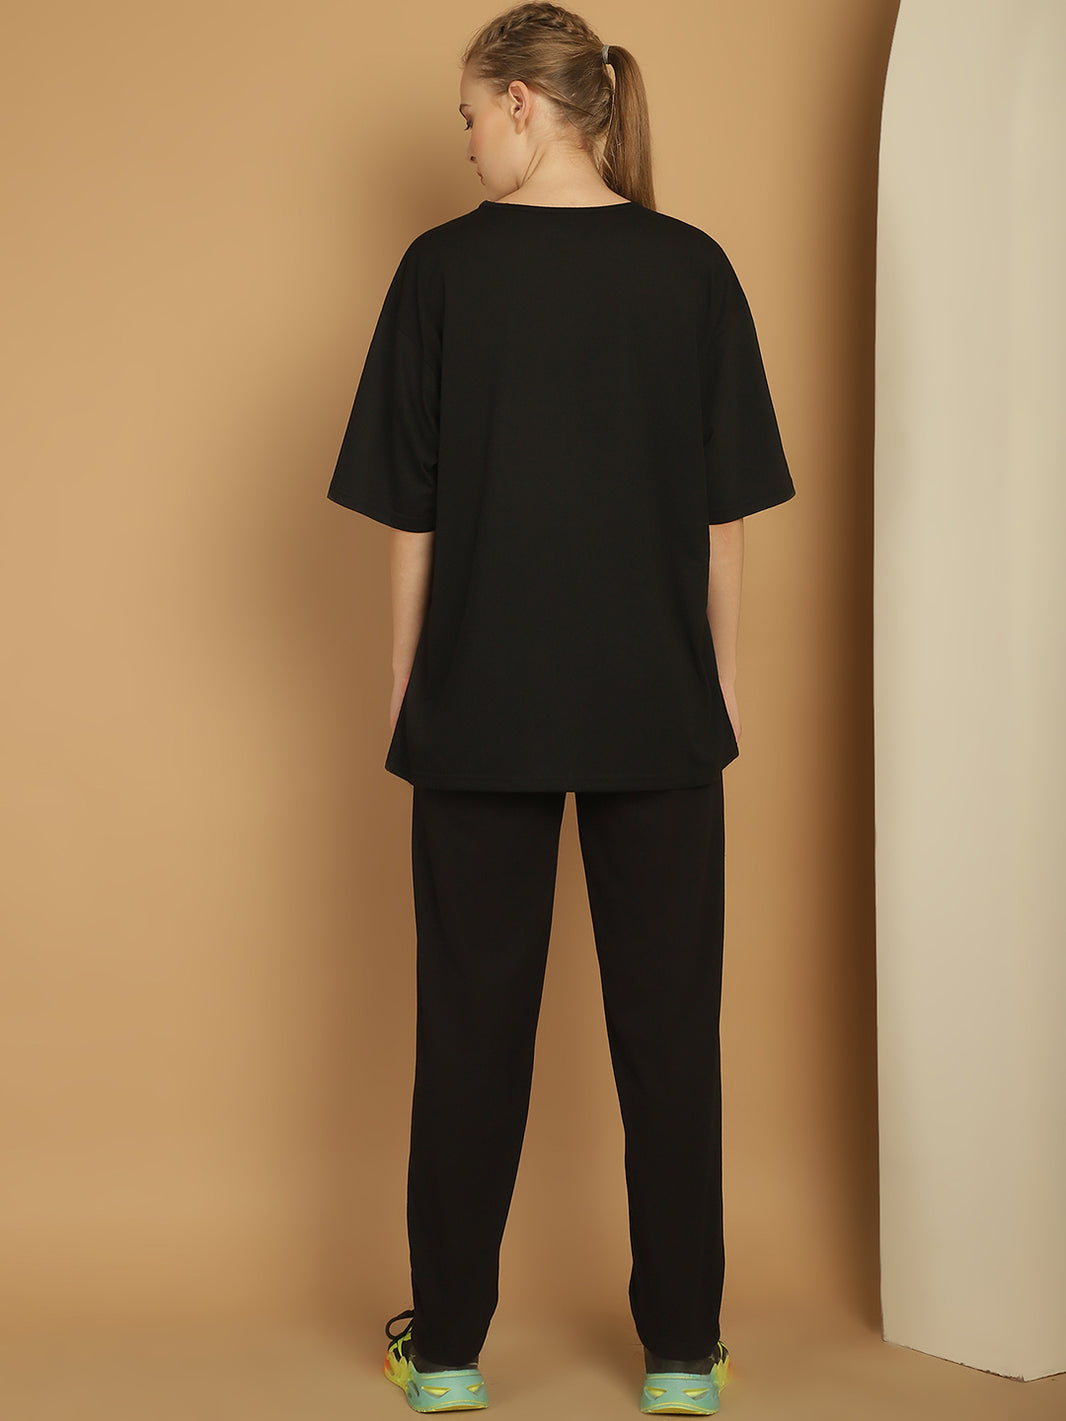 Vimal Jonney Printed  Black Round Neck Cotton Oversize Half sleeves Co-ord set Tracksuit For Women